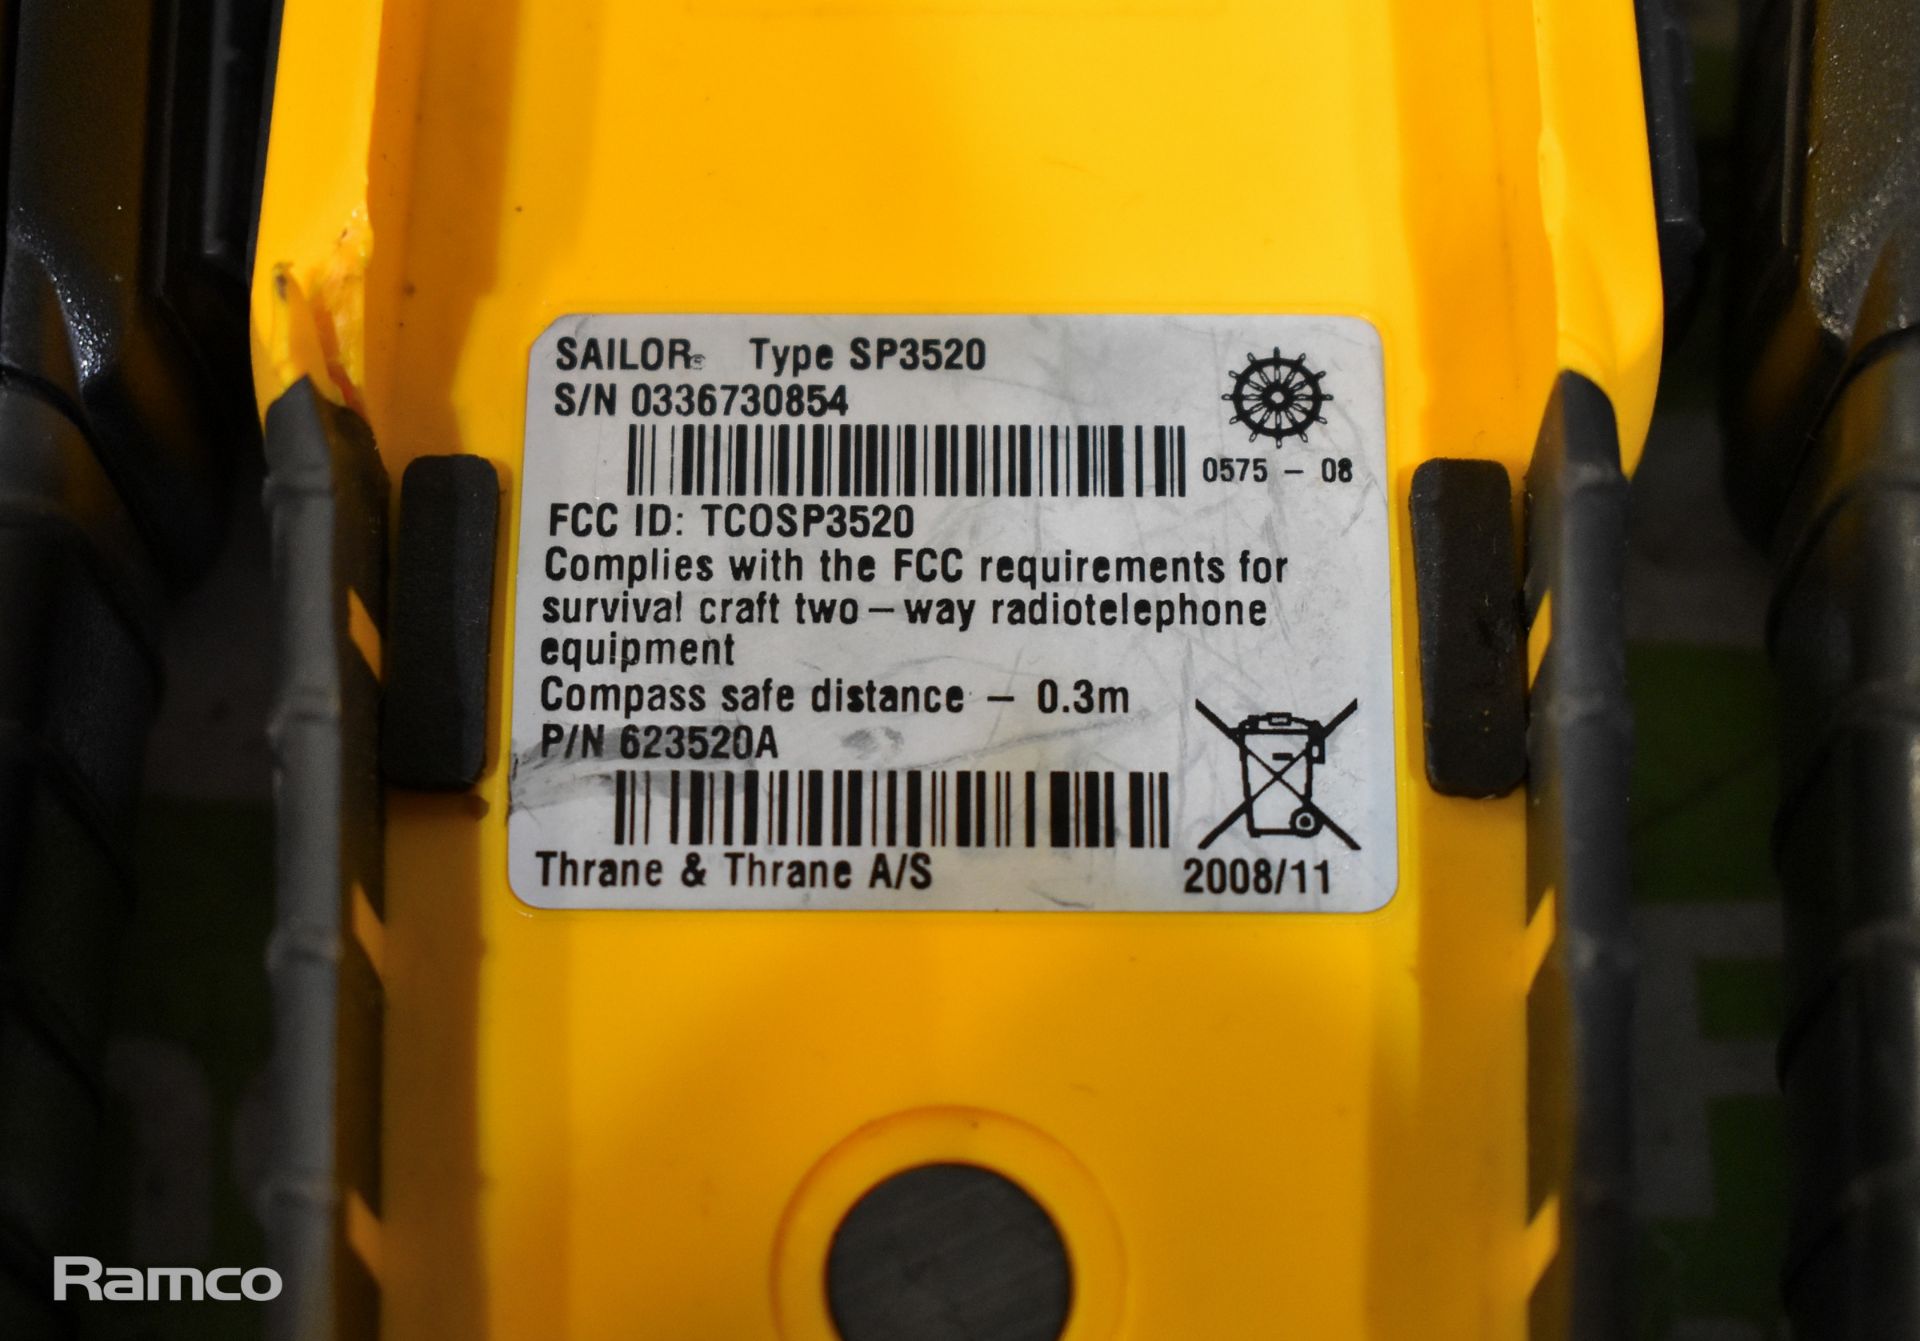 5x Thrane & Thrane Sailor SP3520 walkie talkies - NO BATTERIES, 2x Thrane & Thrane Sailor SP3510 - Image 4 of 4